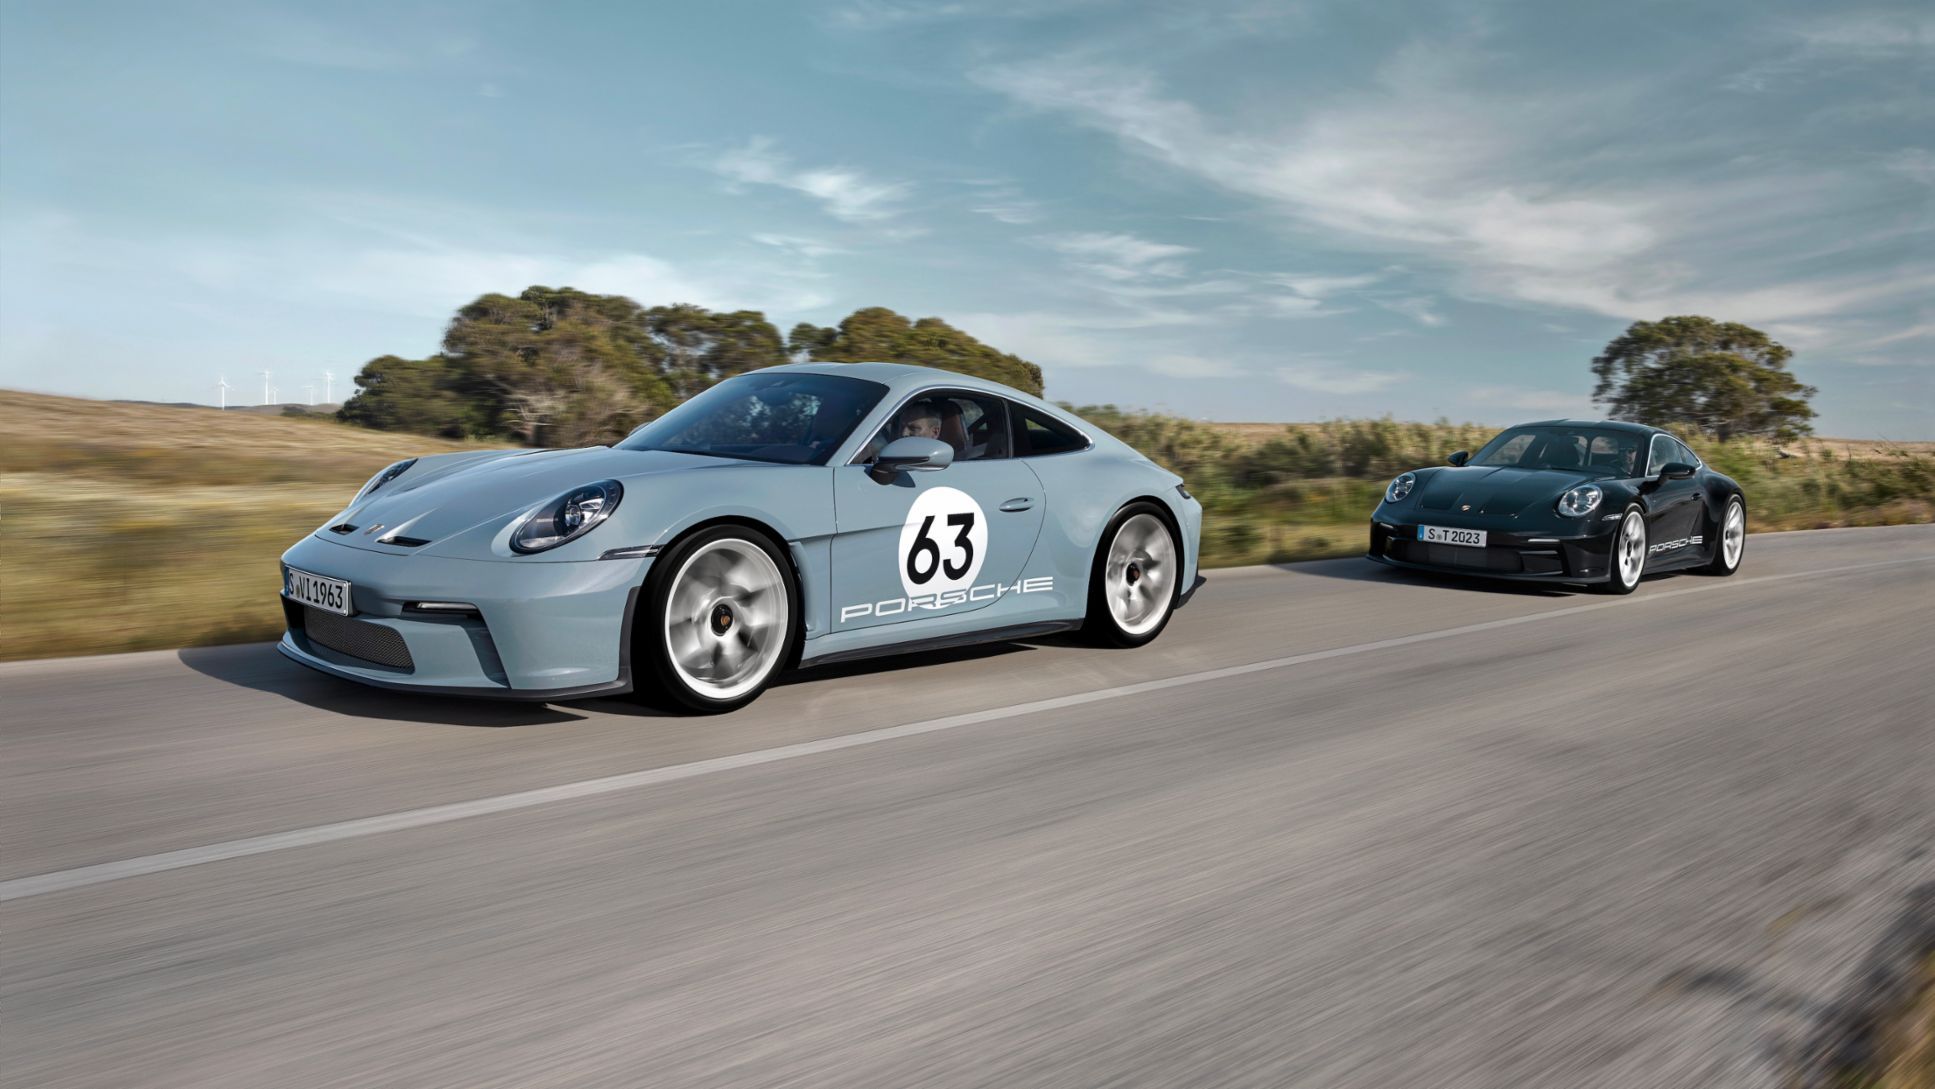 Porsche 911 S/T Icon of Motorsport Excellence